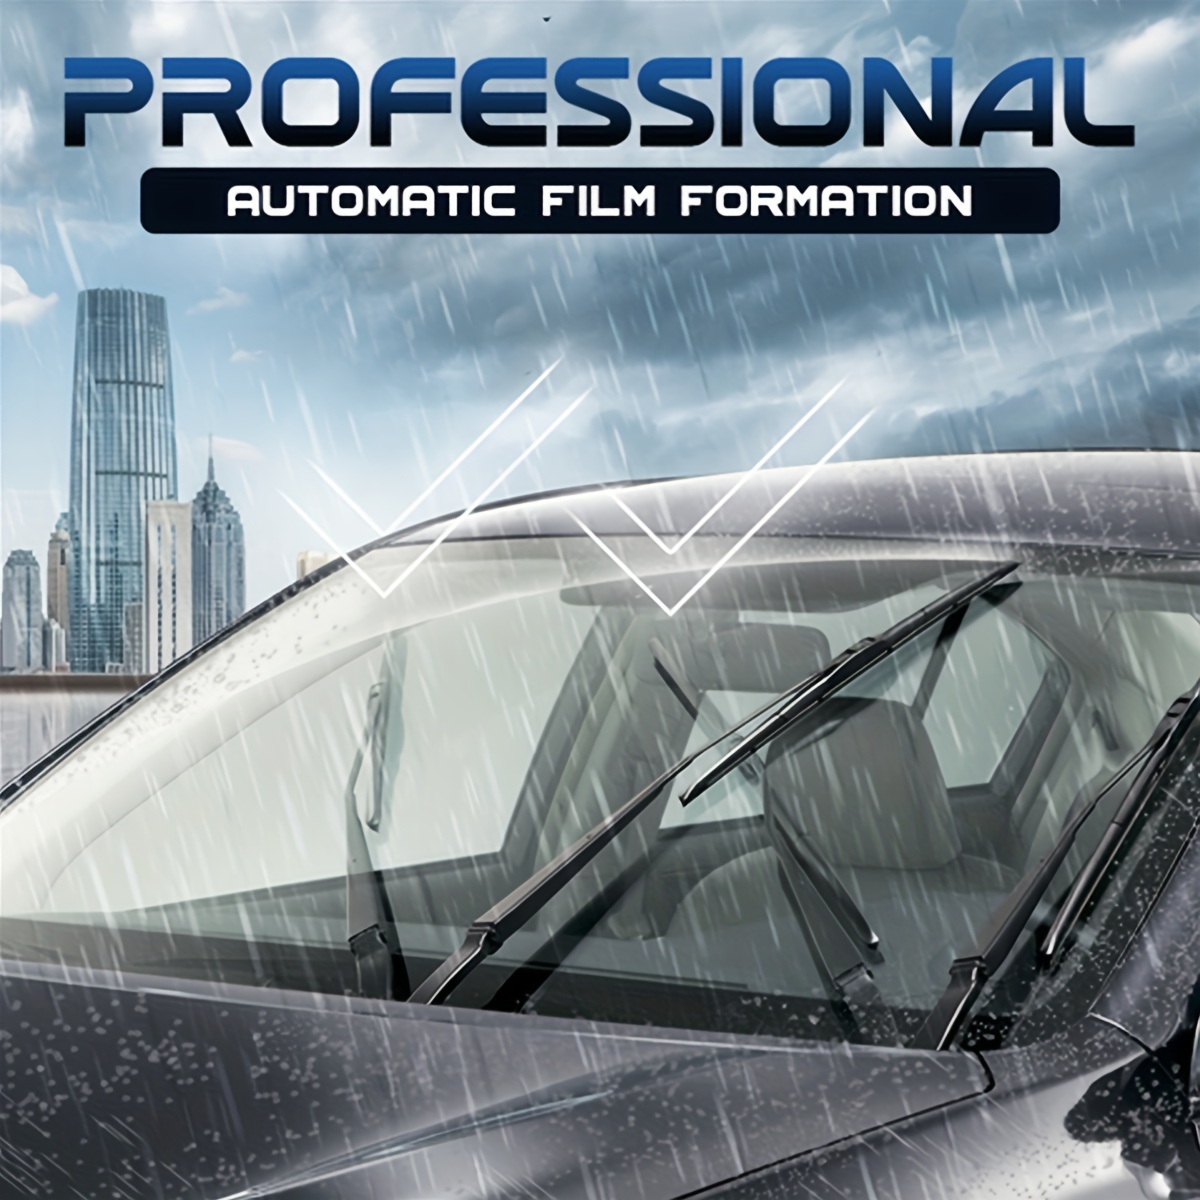 Car Glass Waterproof Coating Agent 30ML 